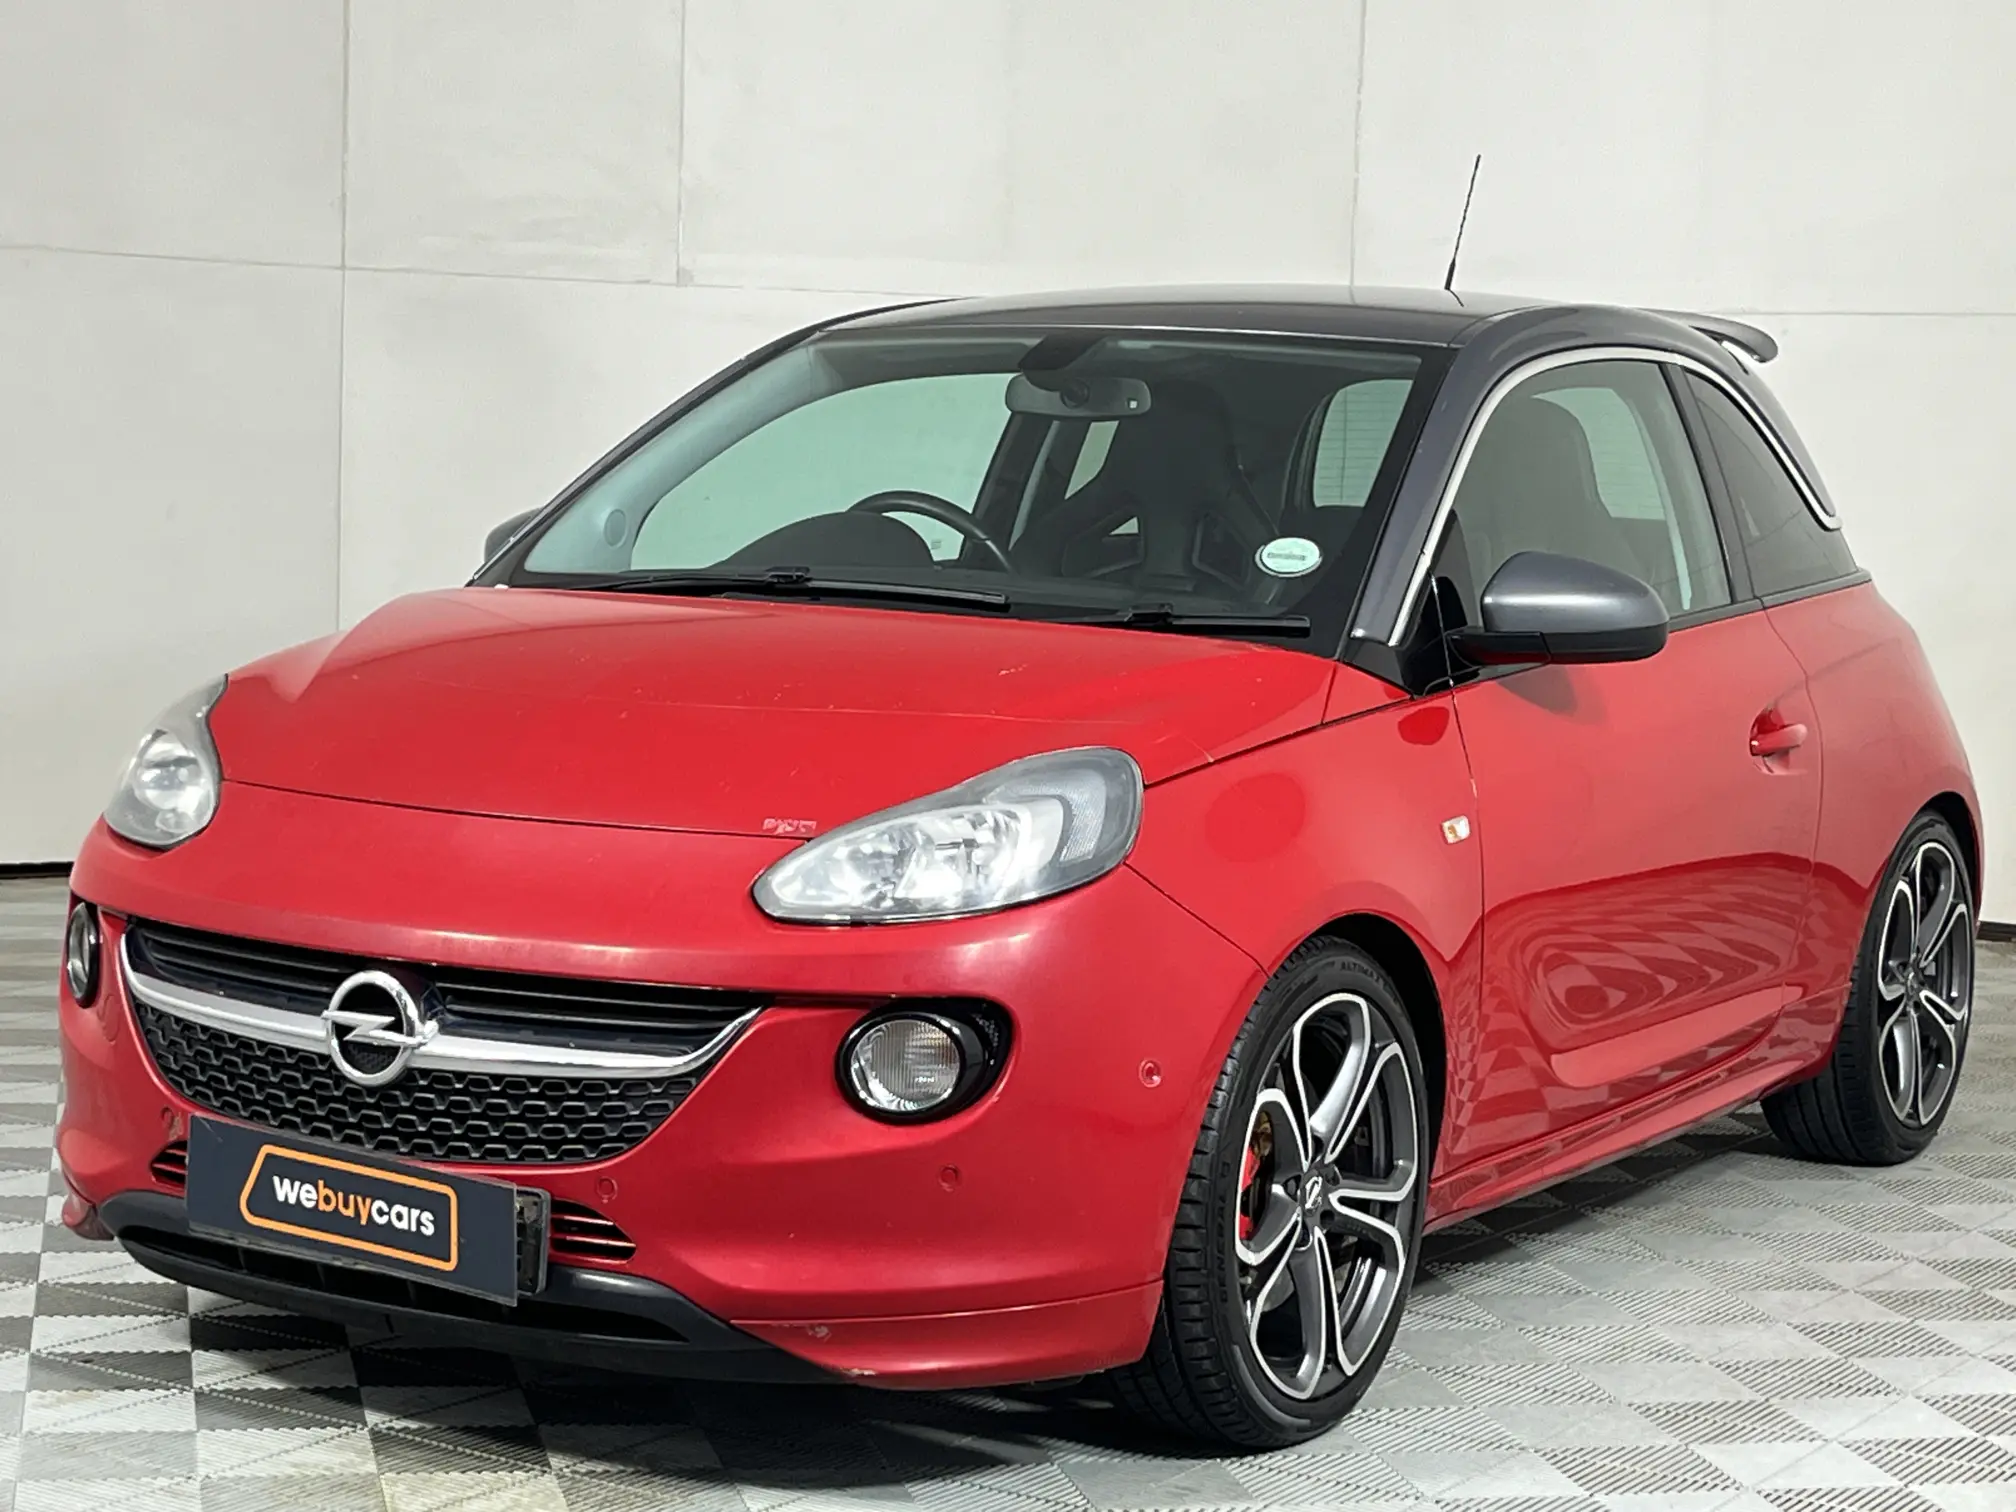 2017 Opel Adam S 1.4T (3dr)